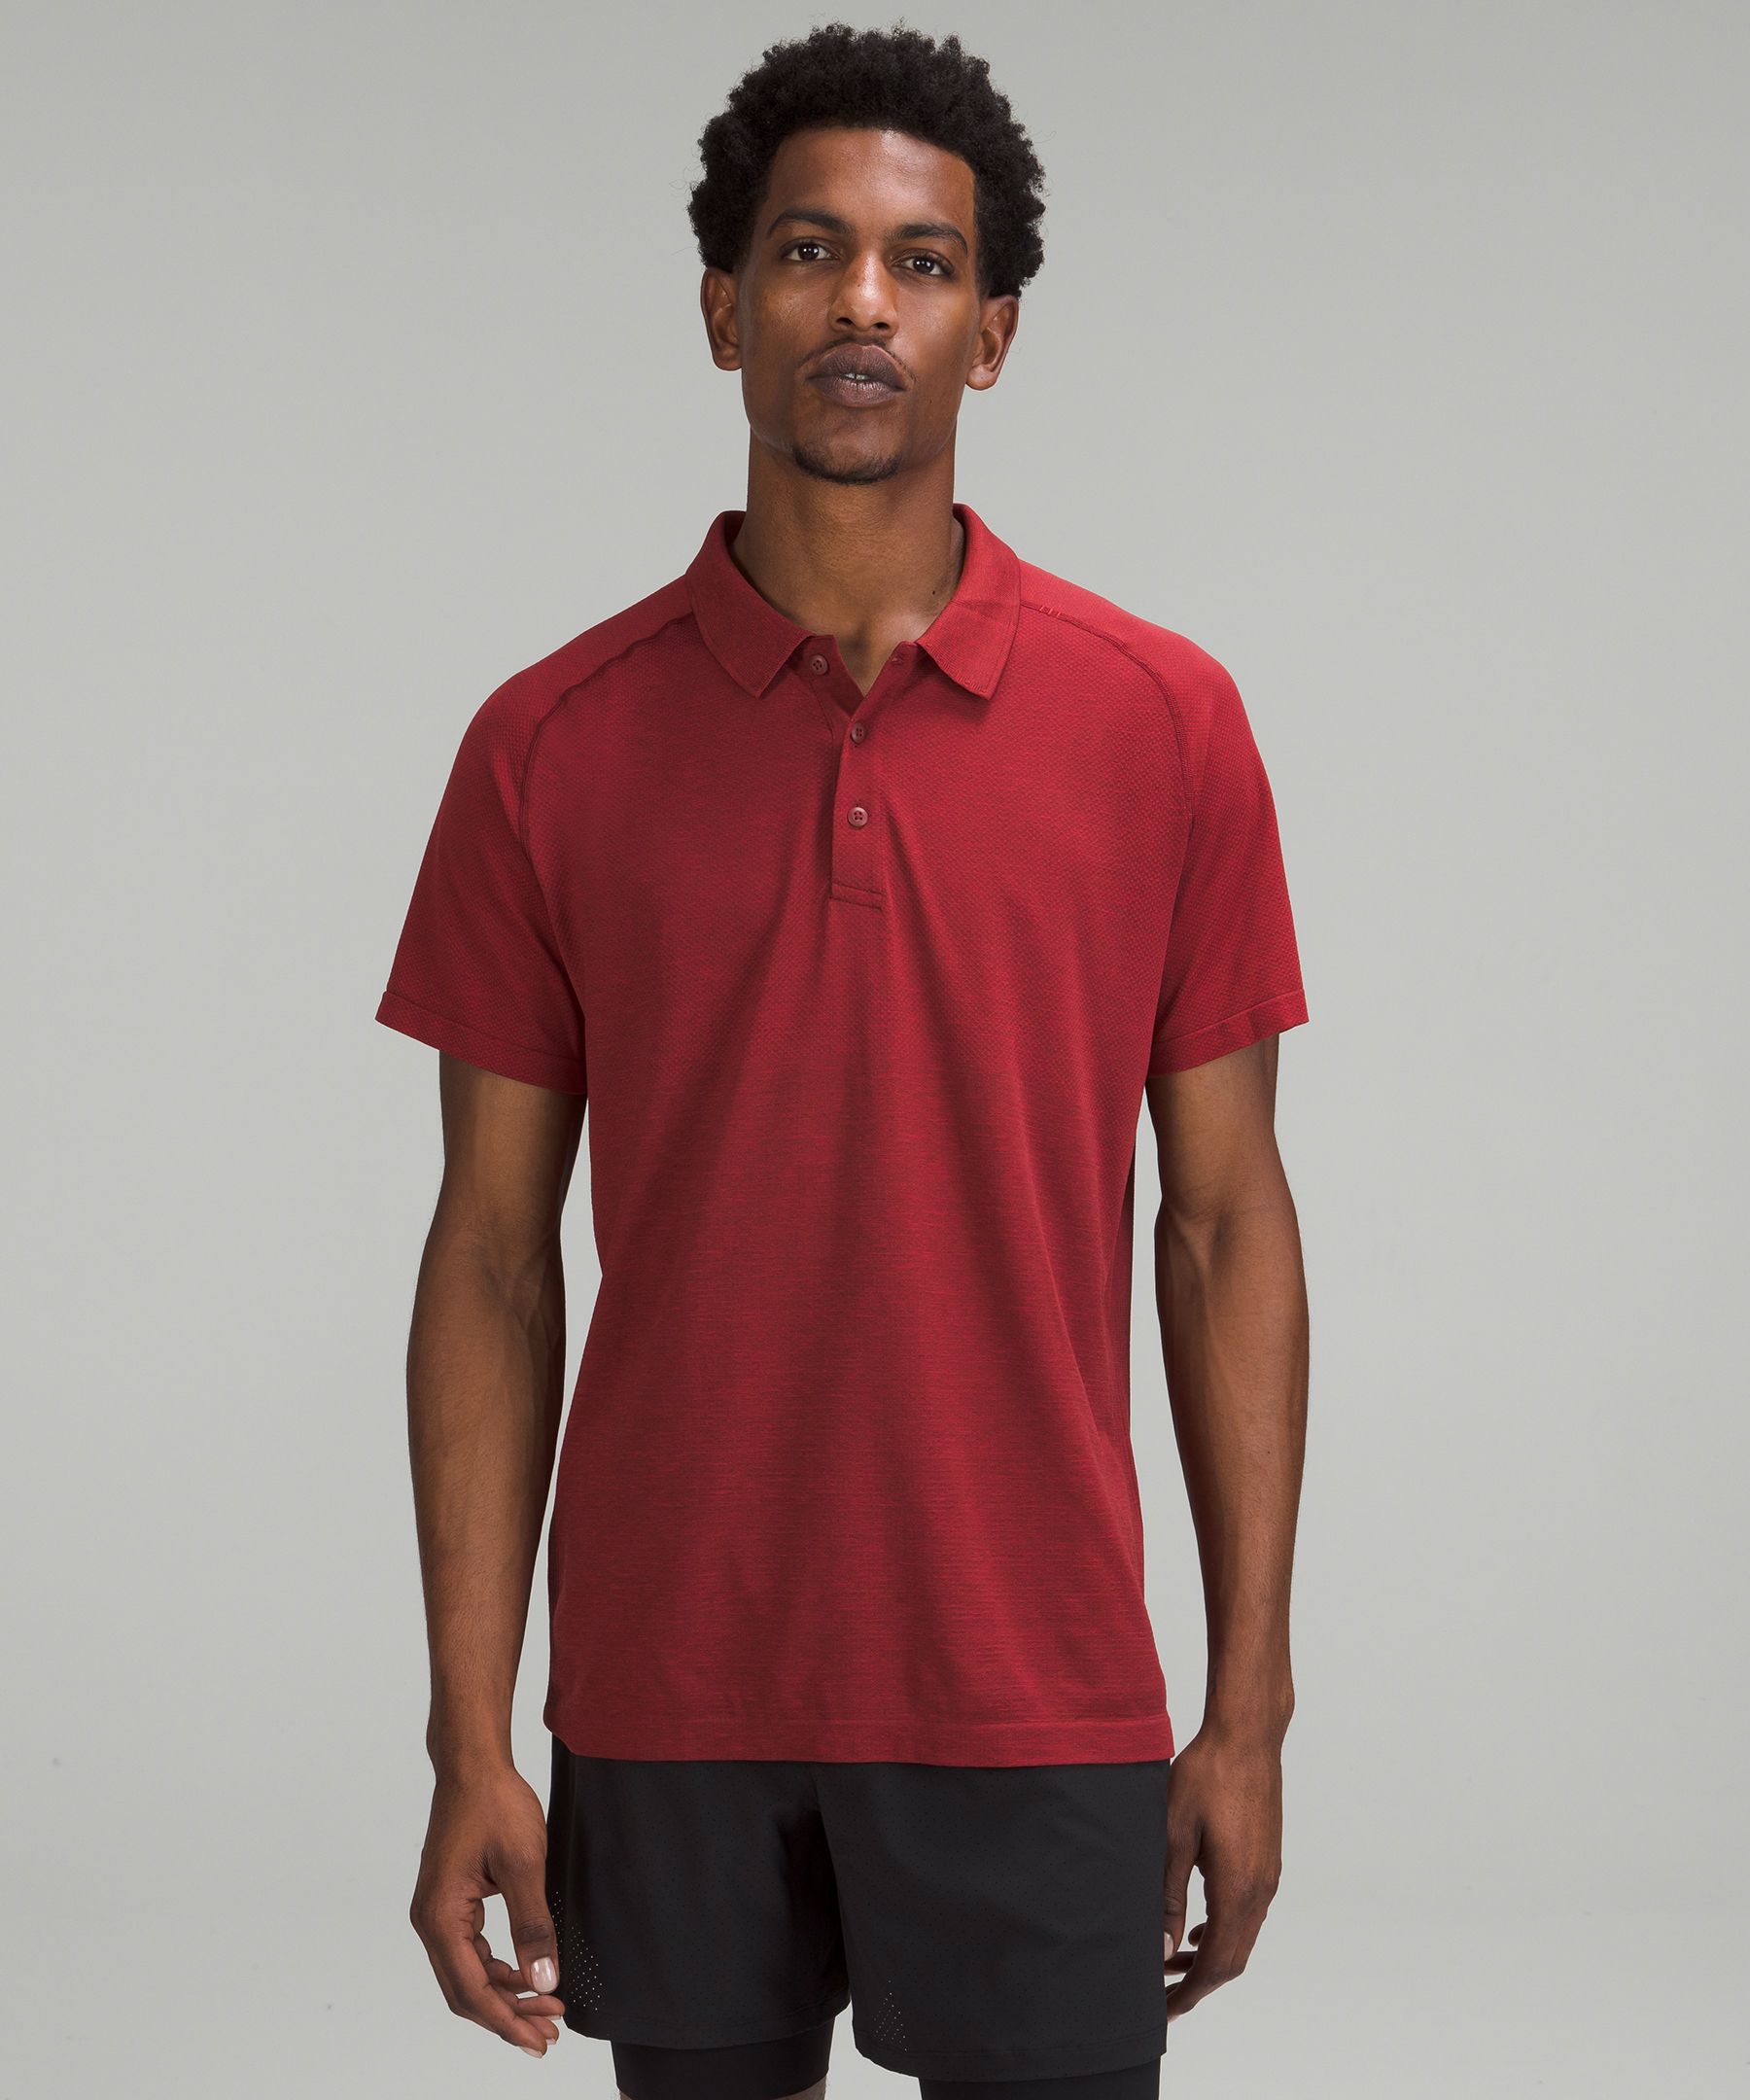 Lululemon Metal Vent Tech Polo Shirt 2.0 In Dark Red/savannah